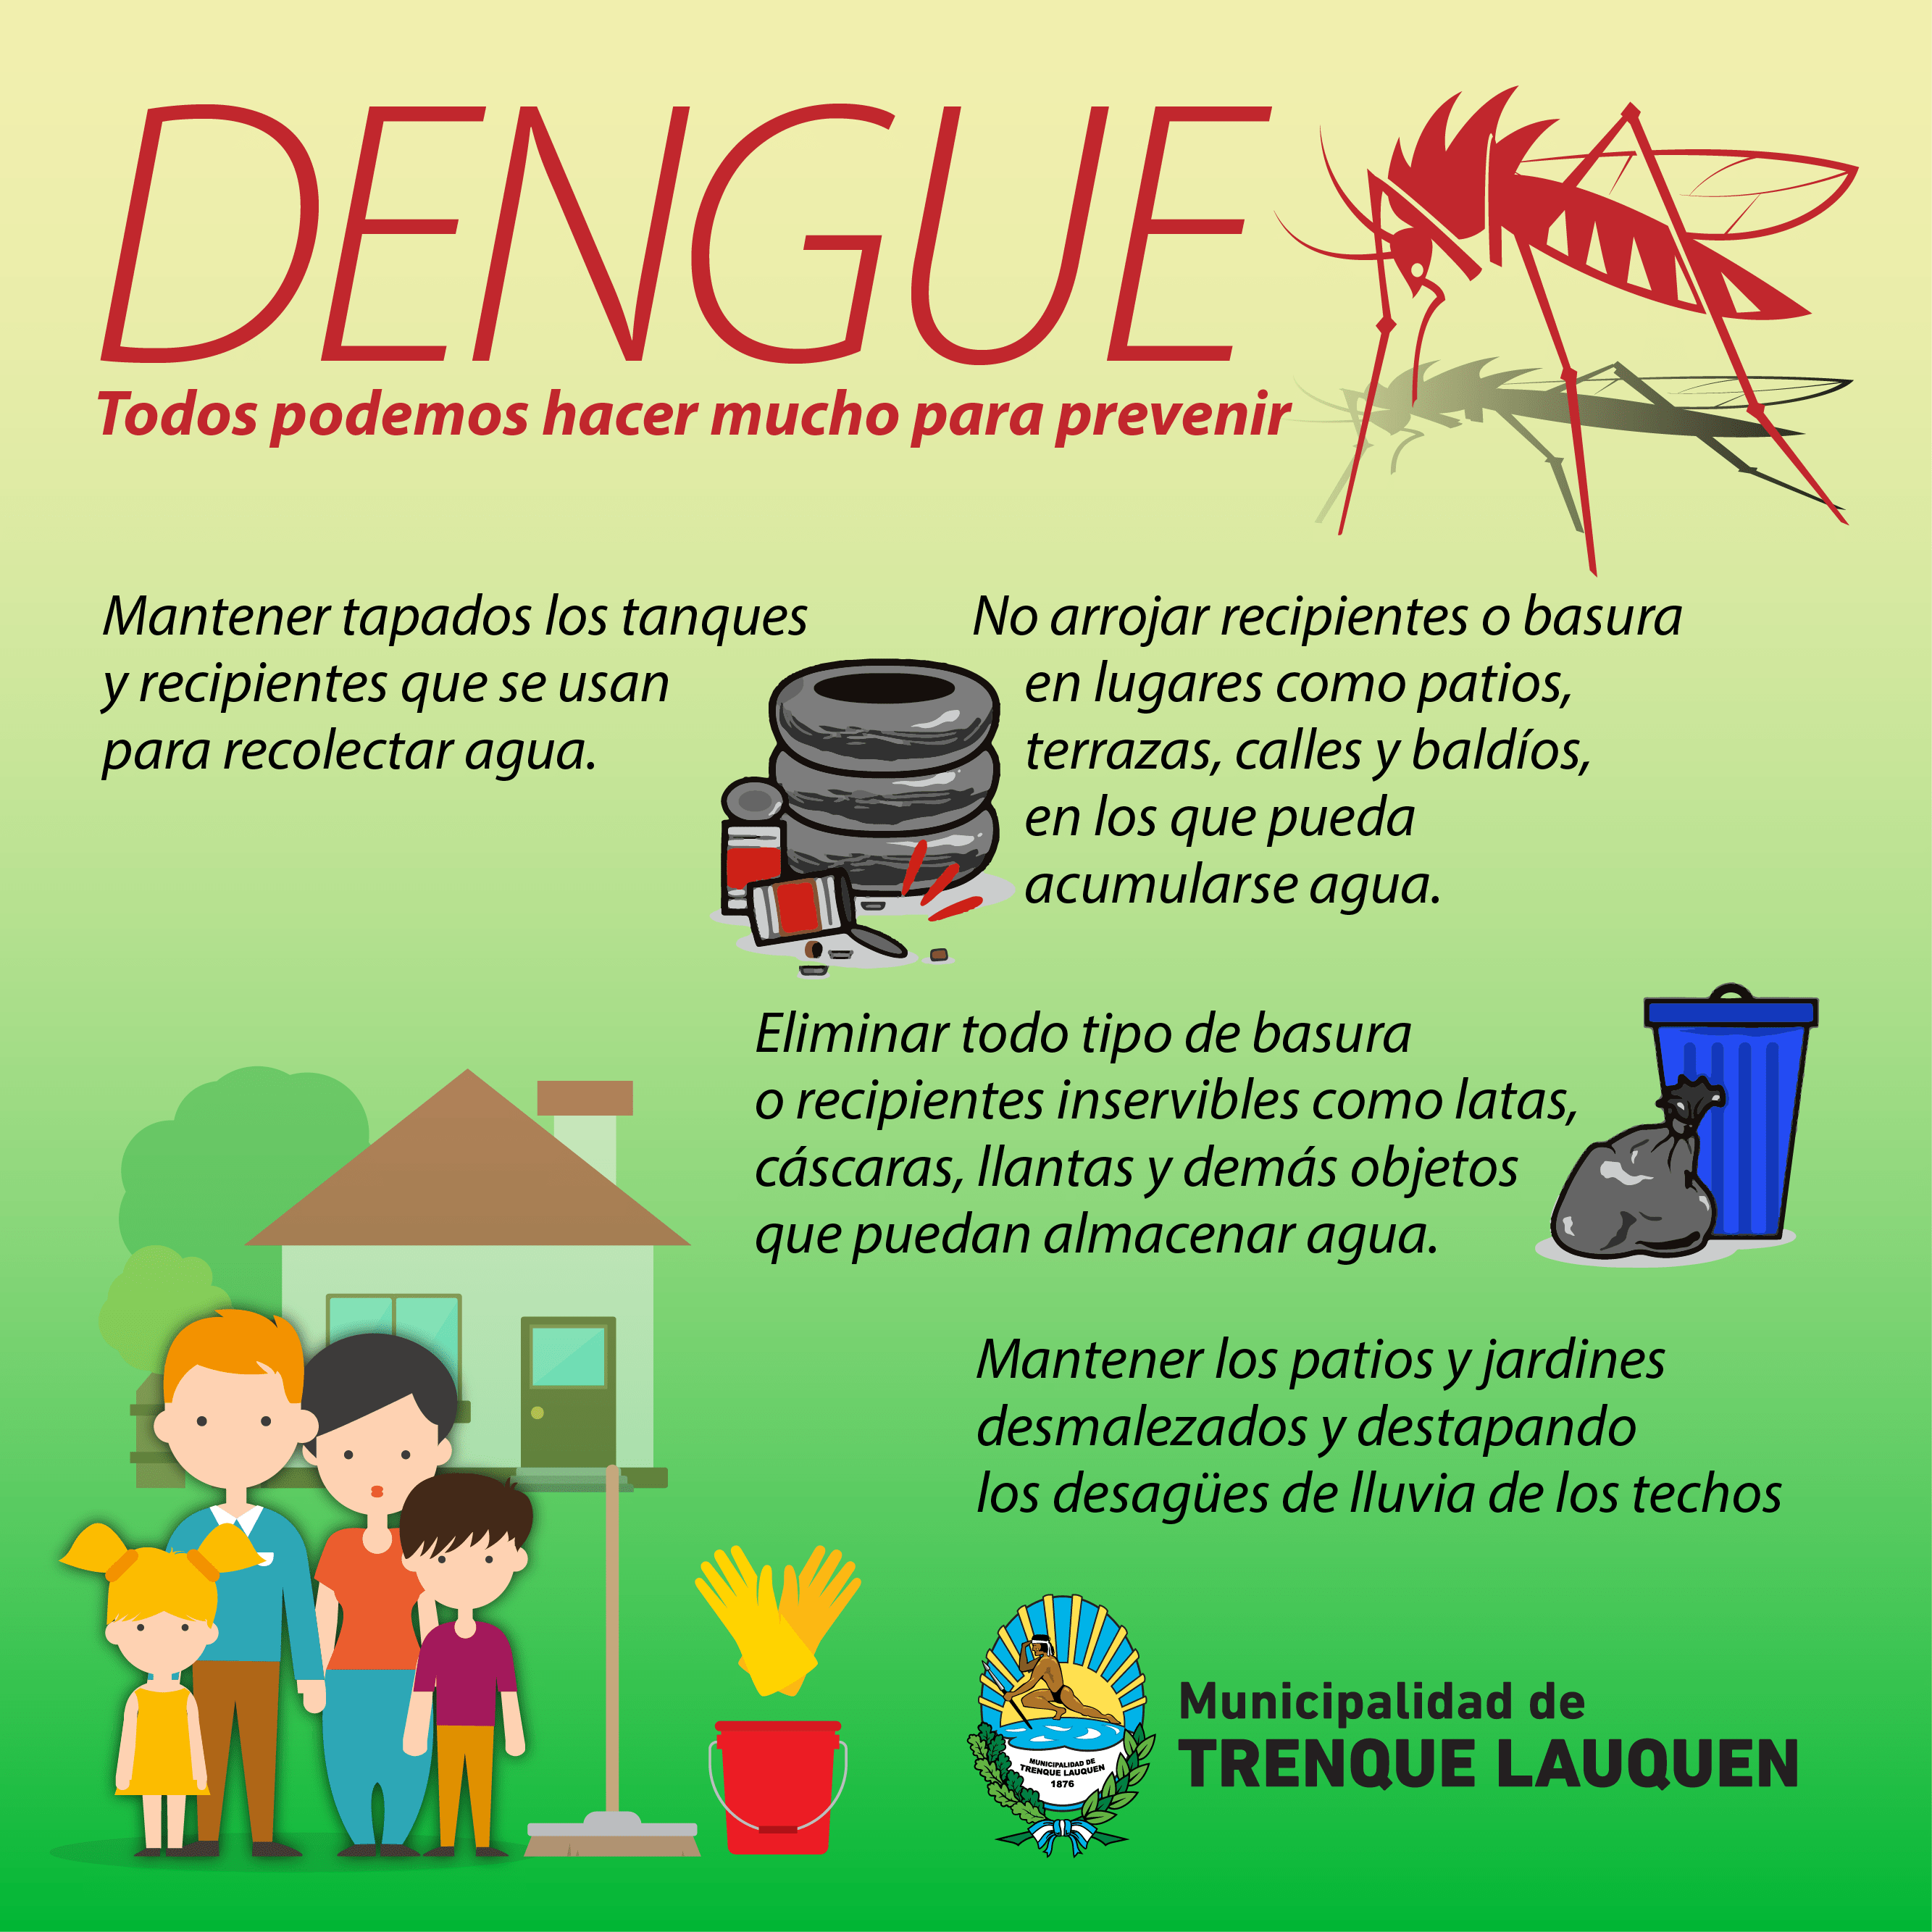 Das ist der Anfang vom Ende - Pagina 4 Dengue-03